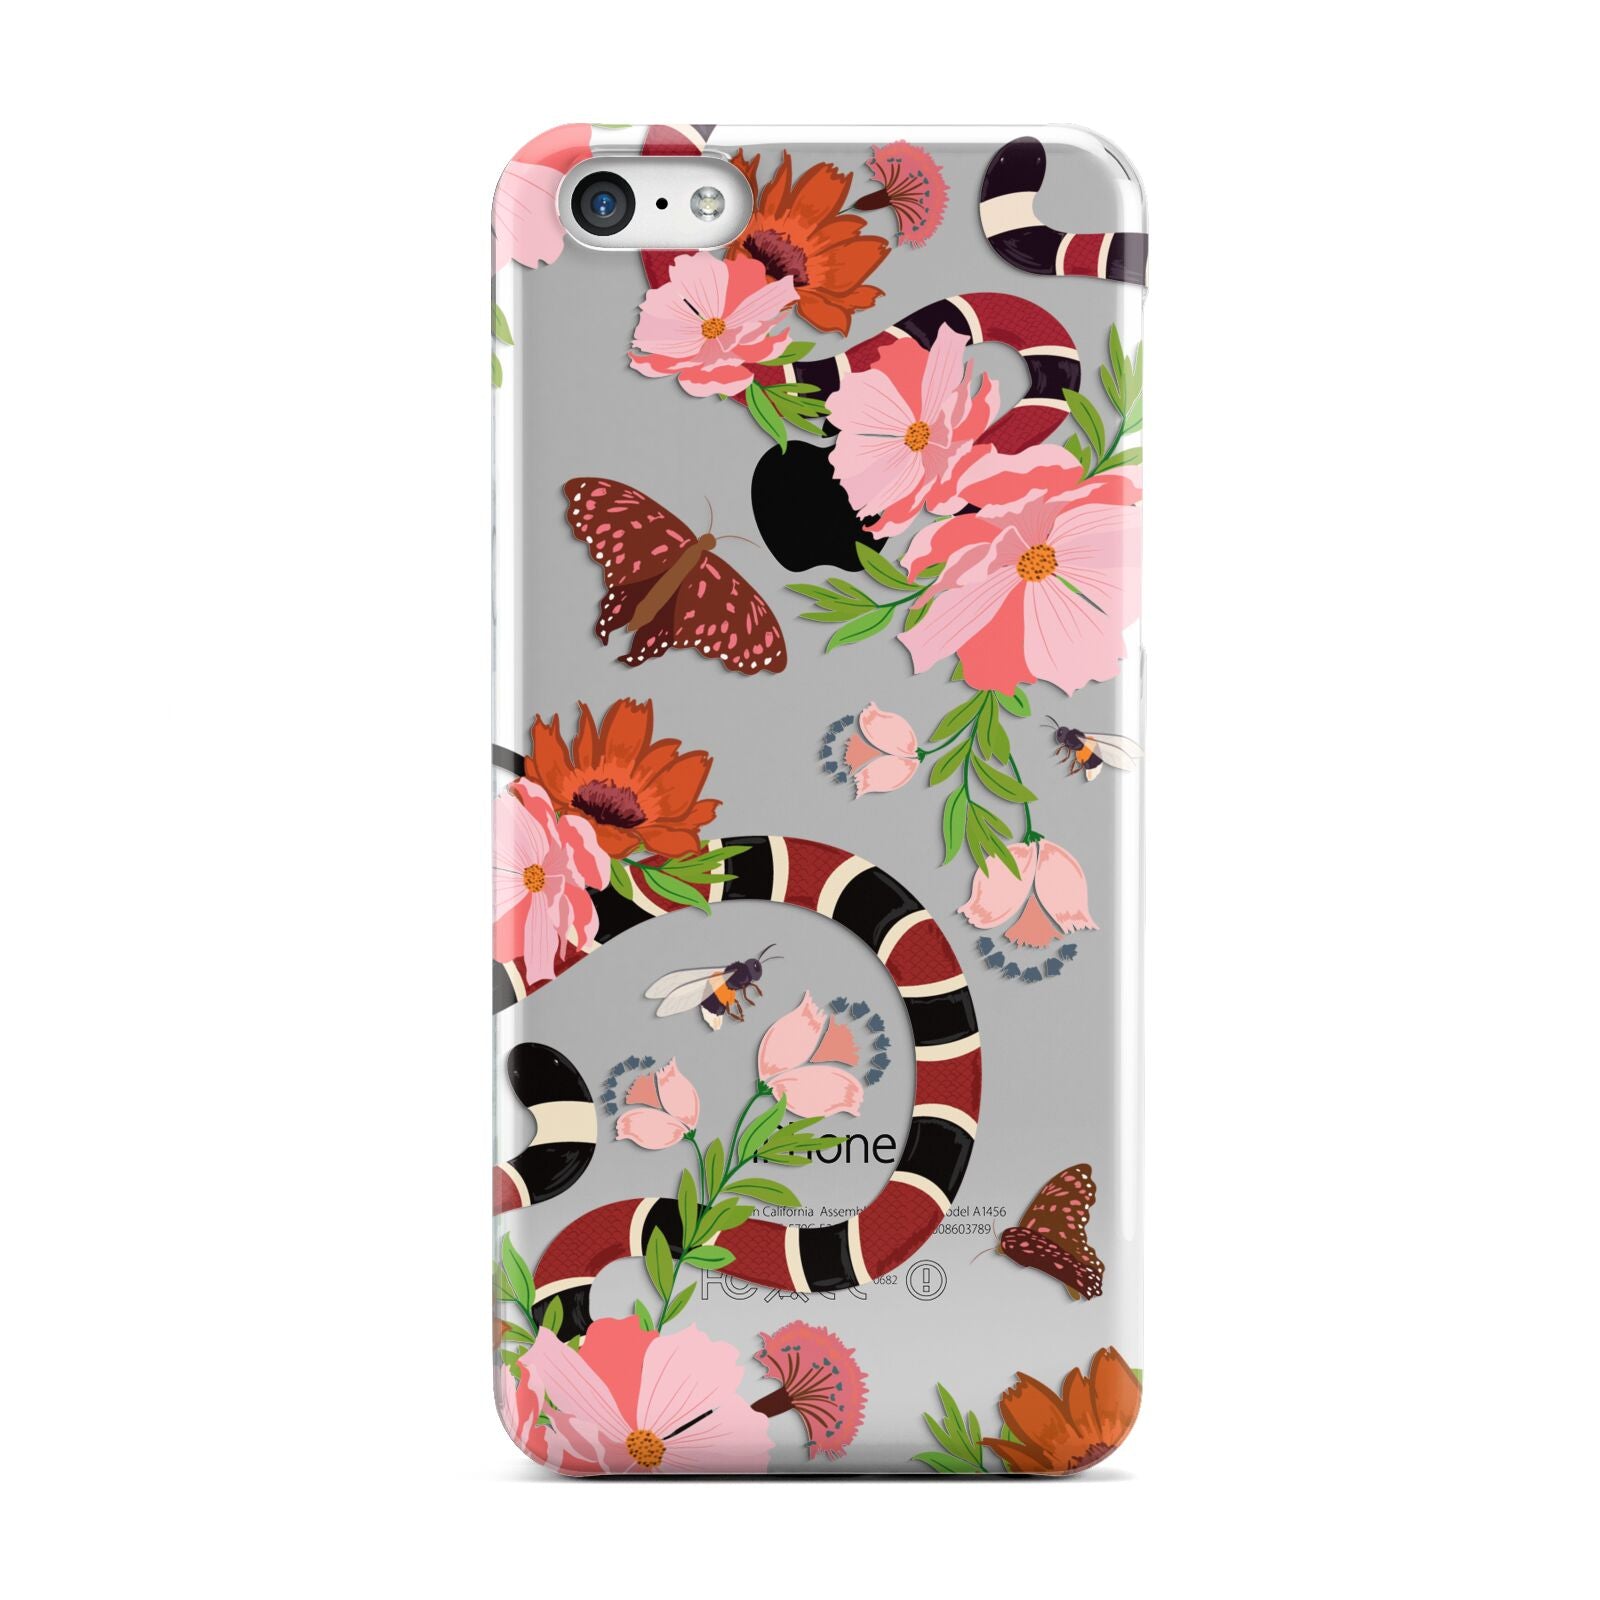 Floral Snake Apple iPhone 5c Case